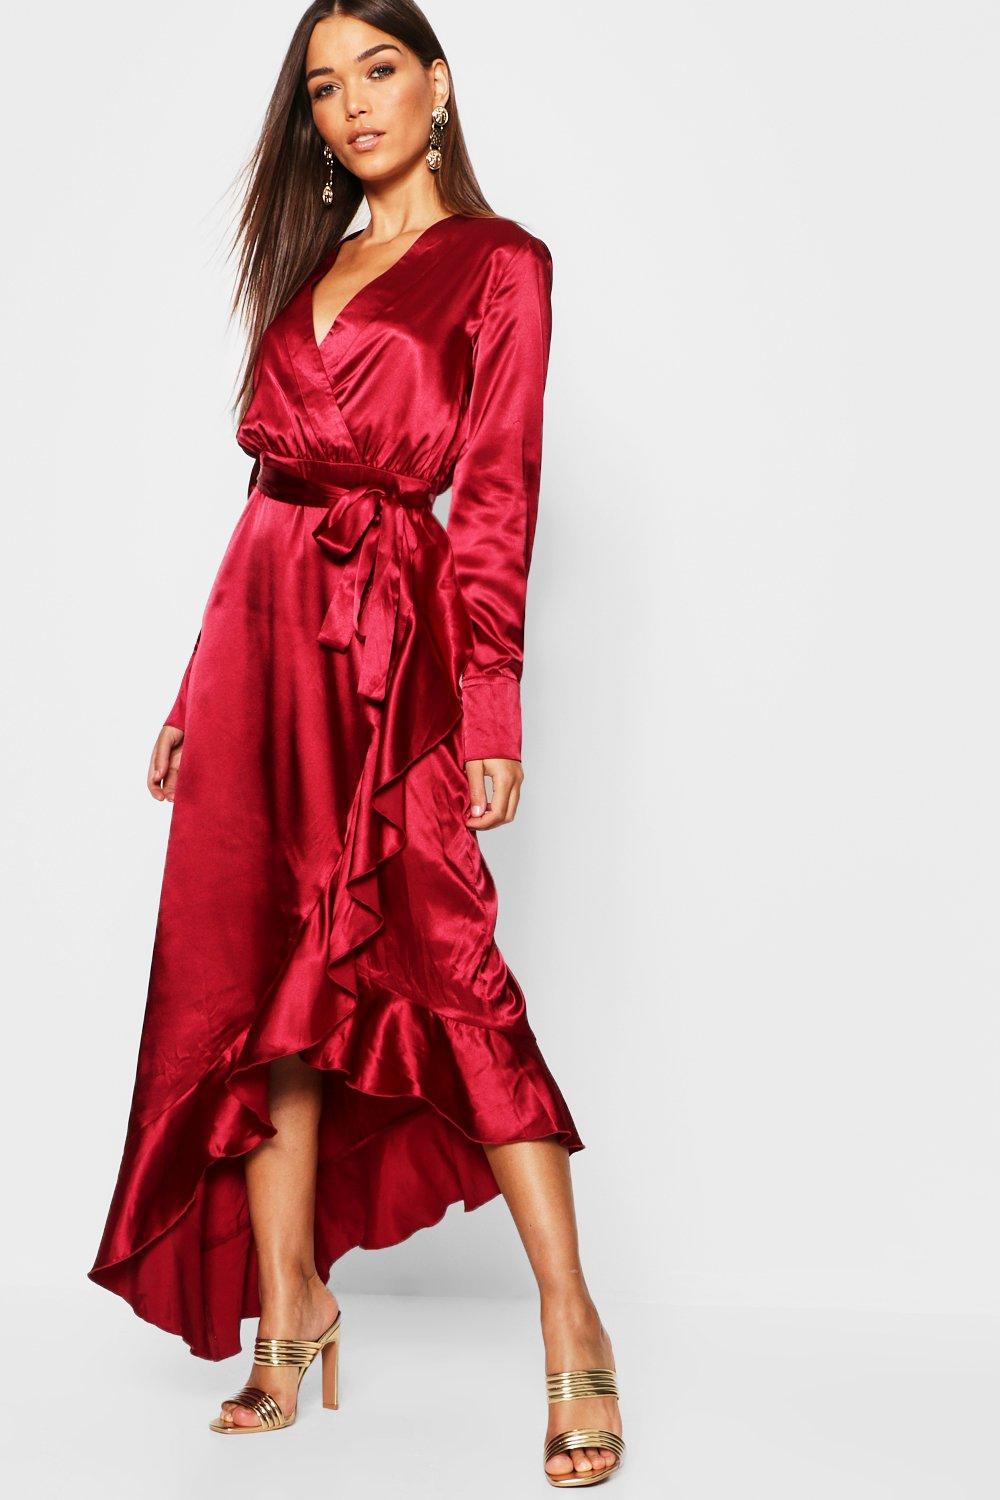 long burgundy wrap dress